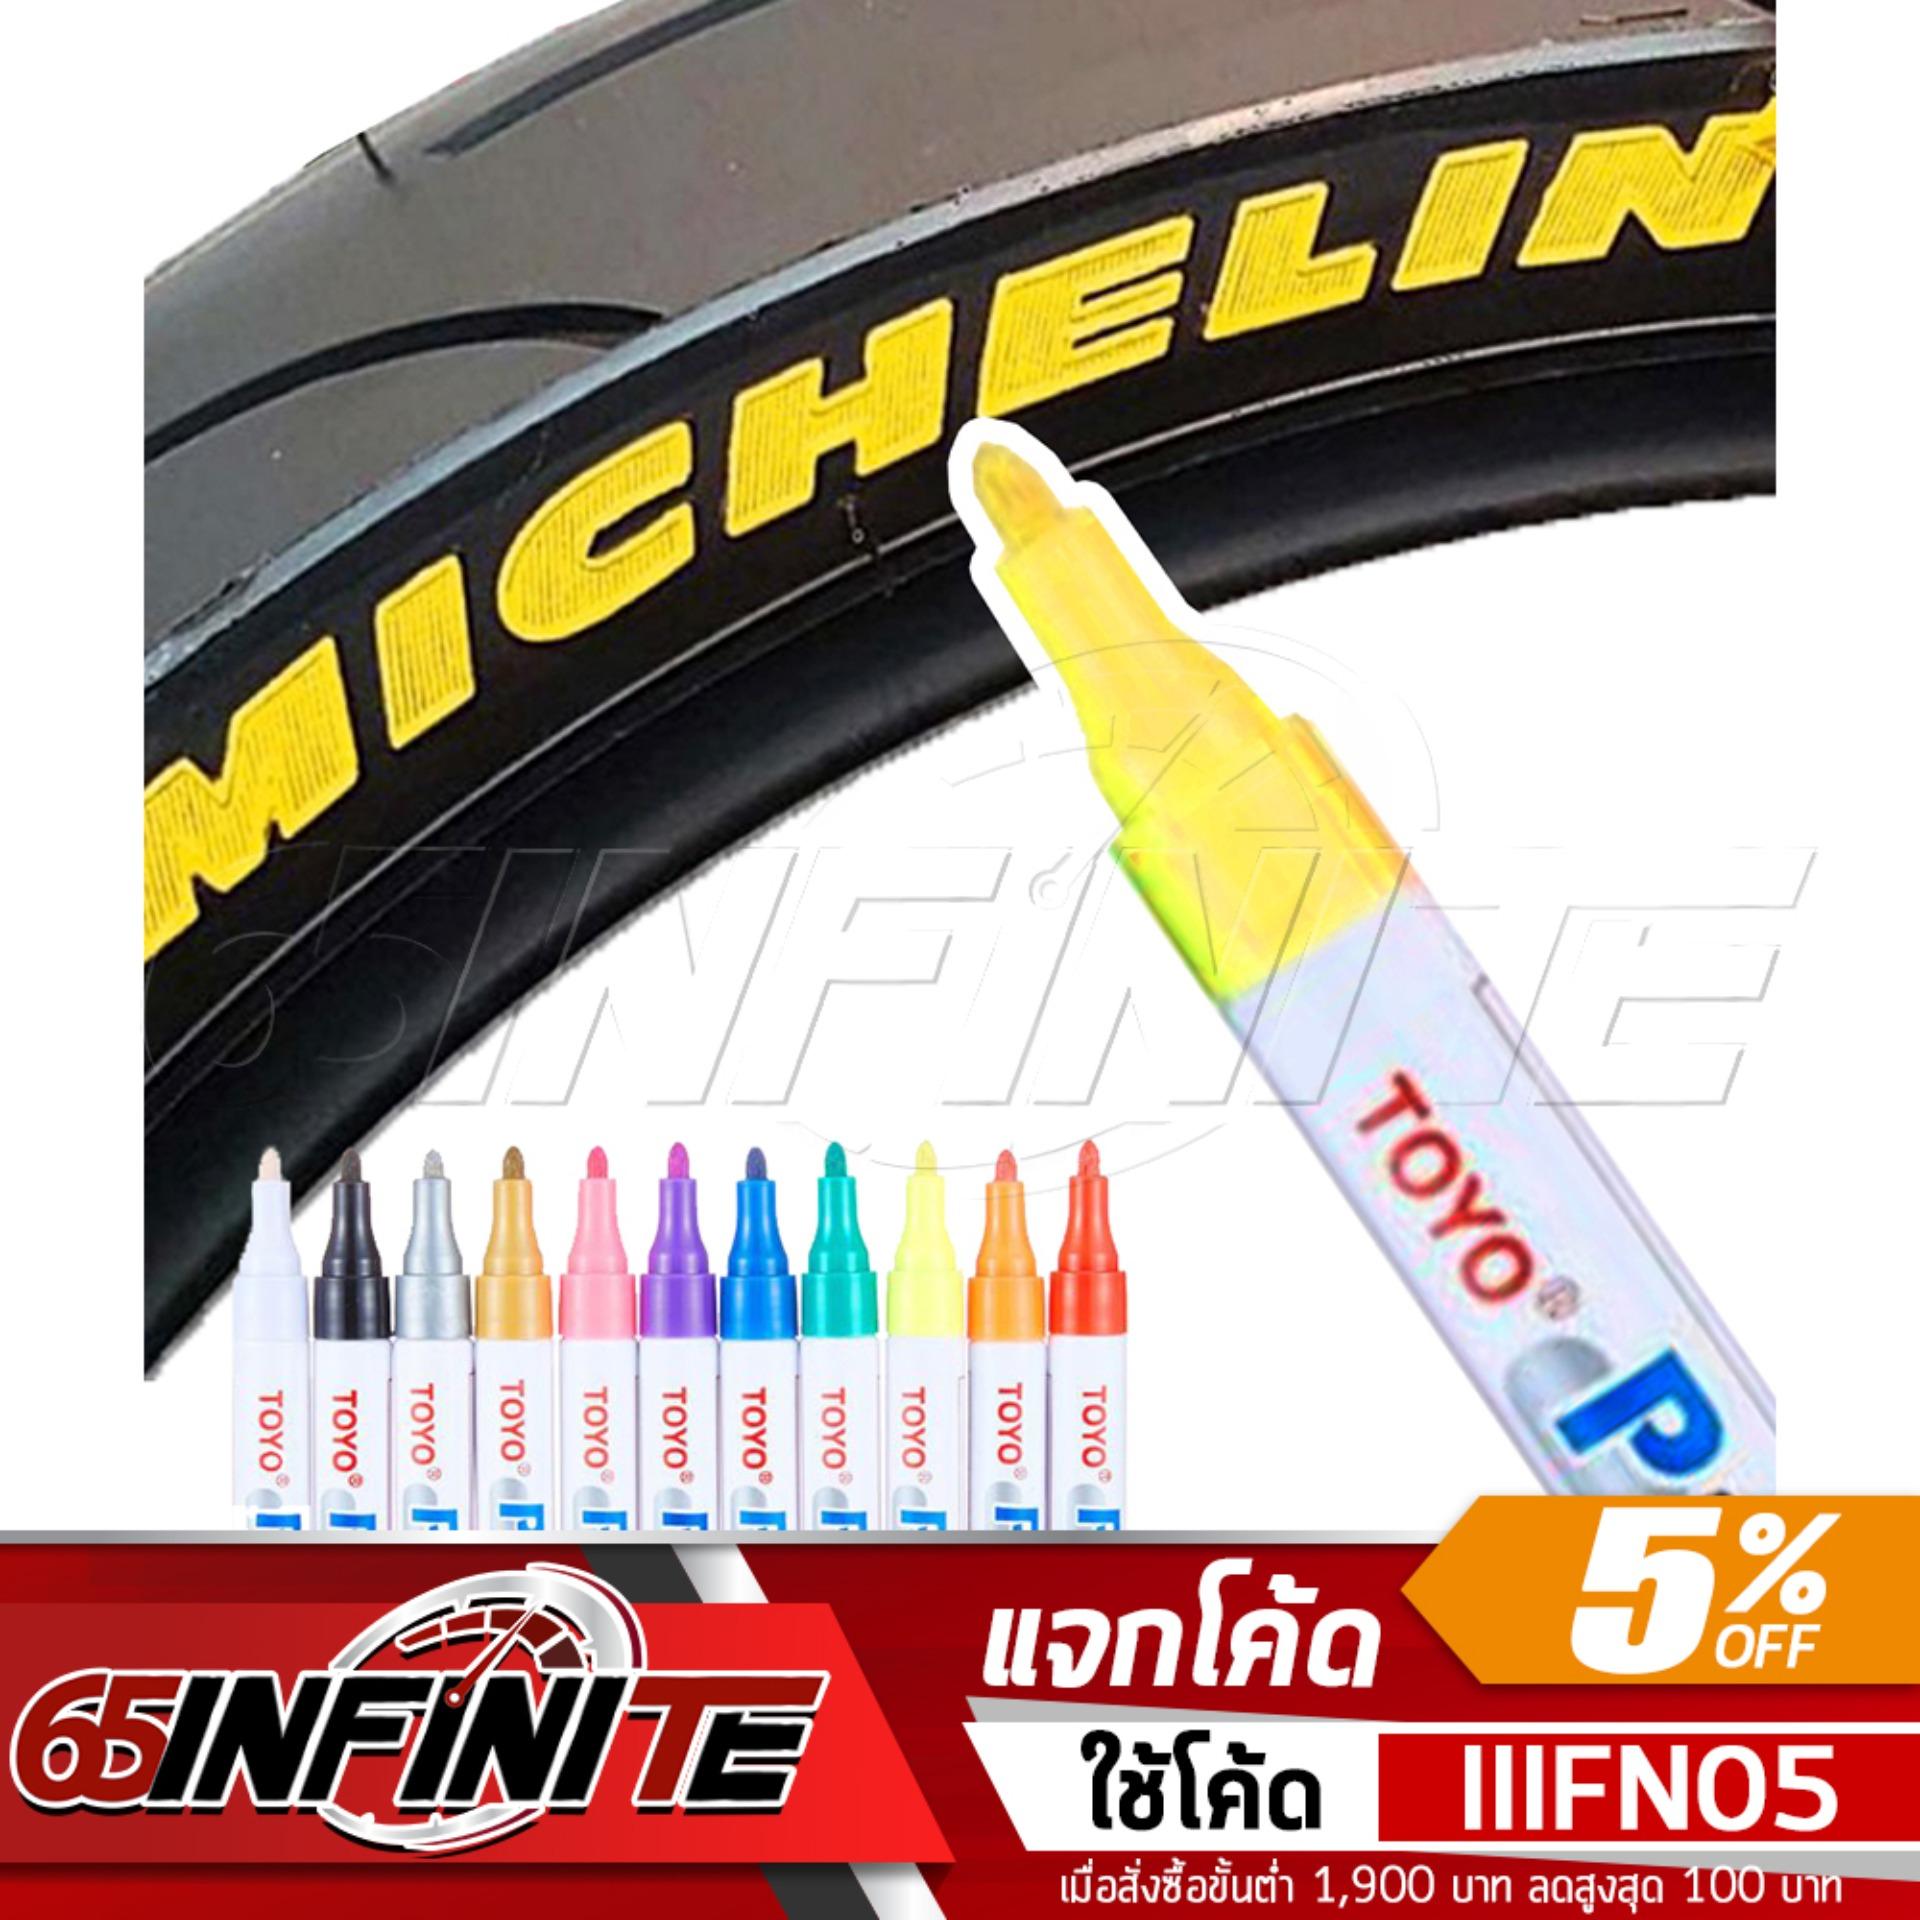 65Infinte TOYO Paint (สีเหลือง) ปากกาเขียนยาง ปากกาเขียนล้อ แต้มแม็กซ์ ยางรถยนต์ ล้อรถยนต์ ของแท้จากญี่ปุ่น 100%